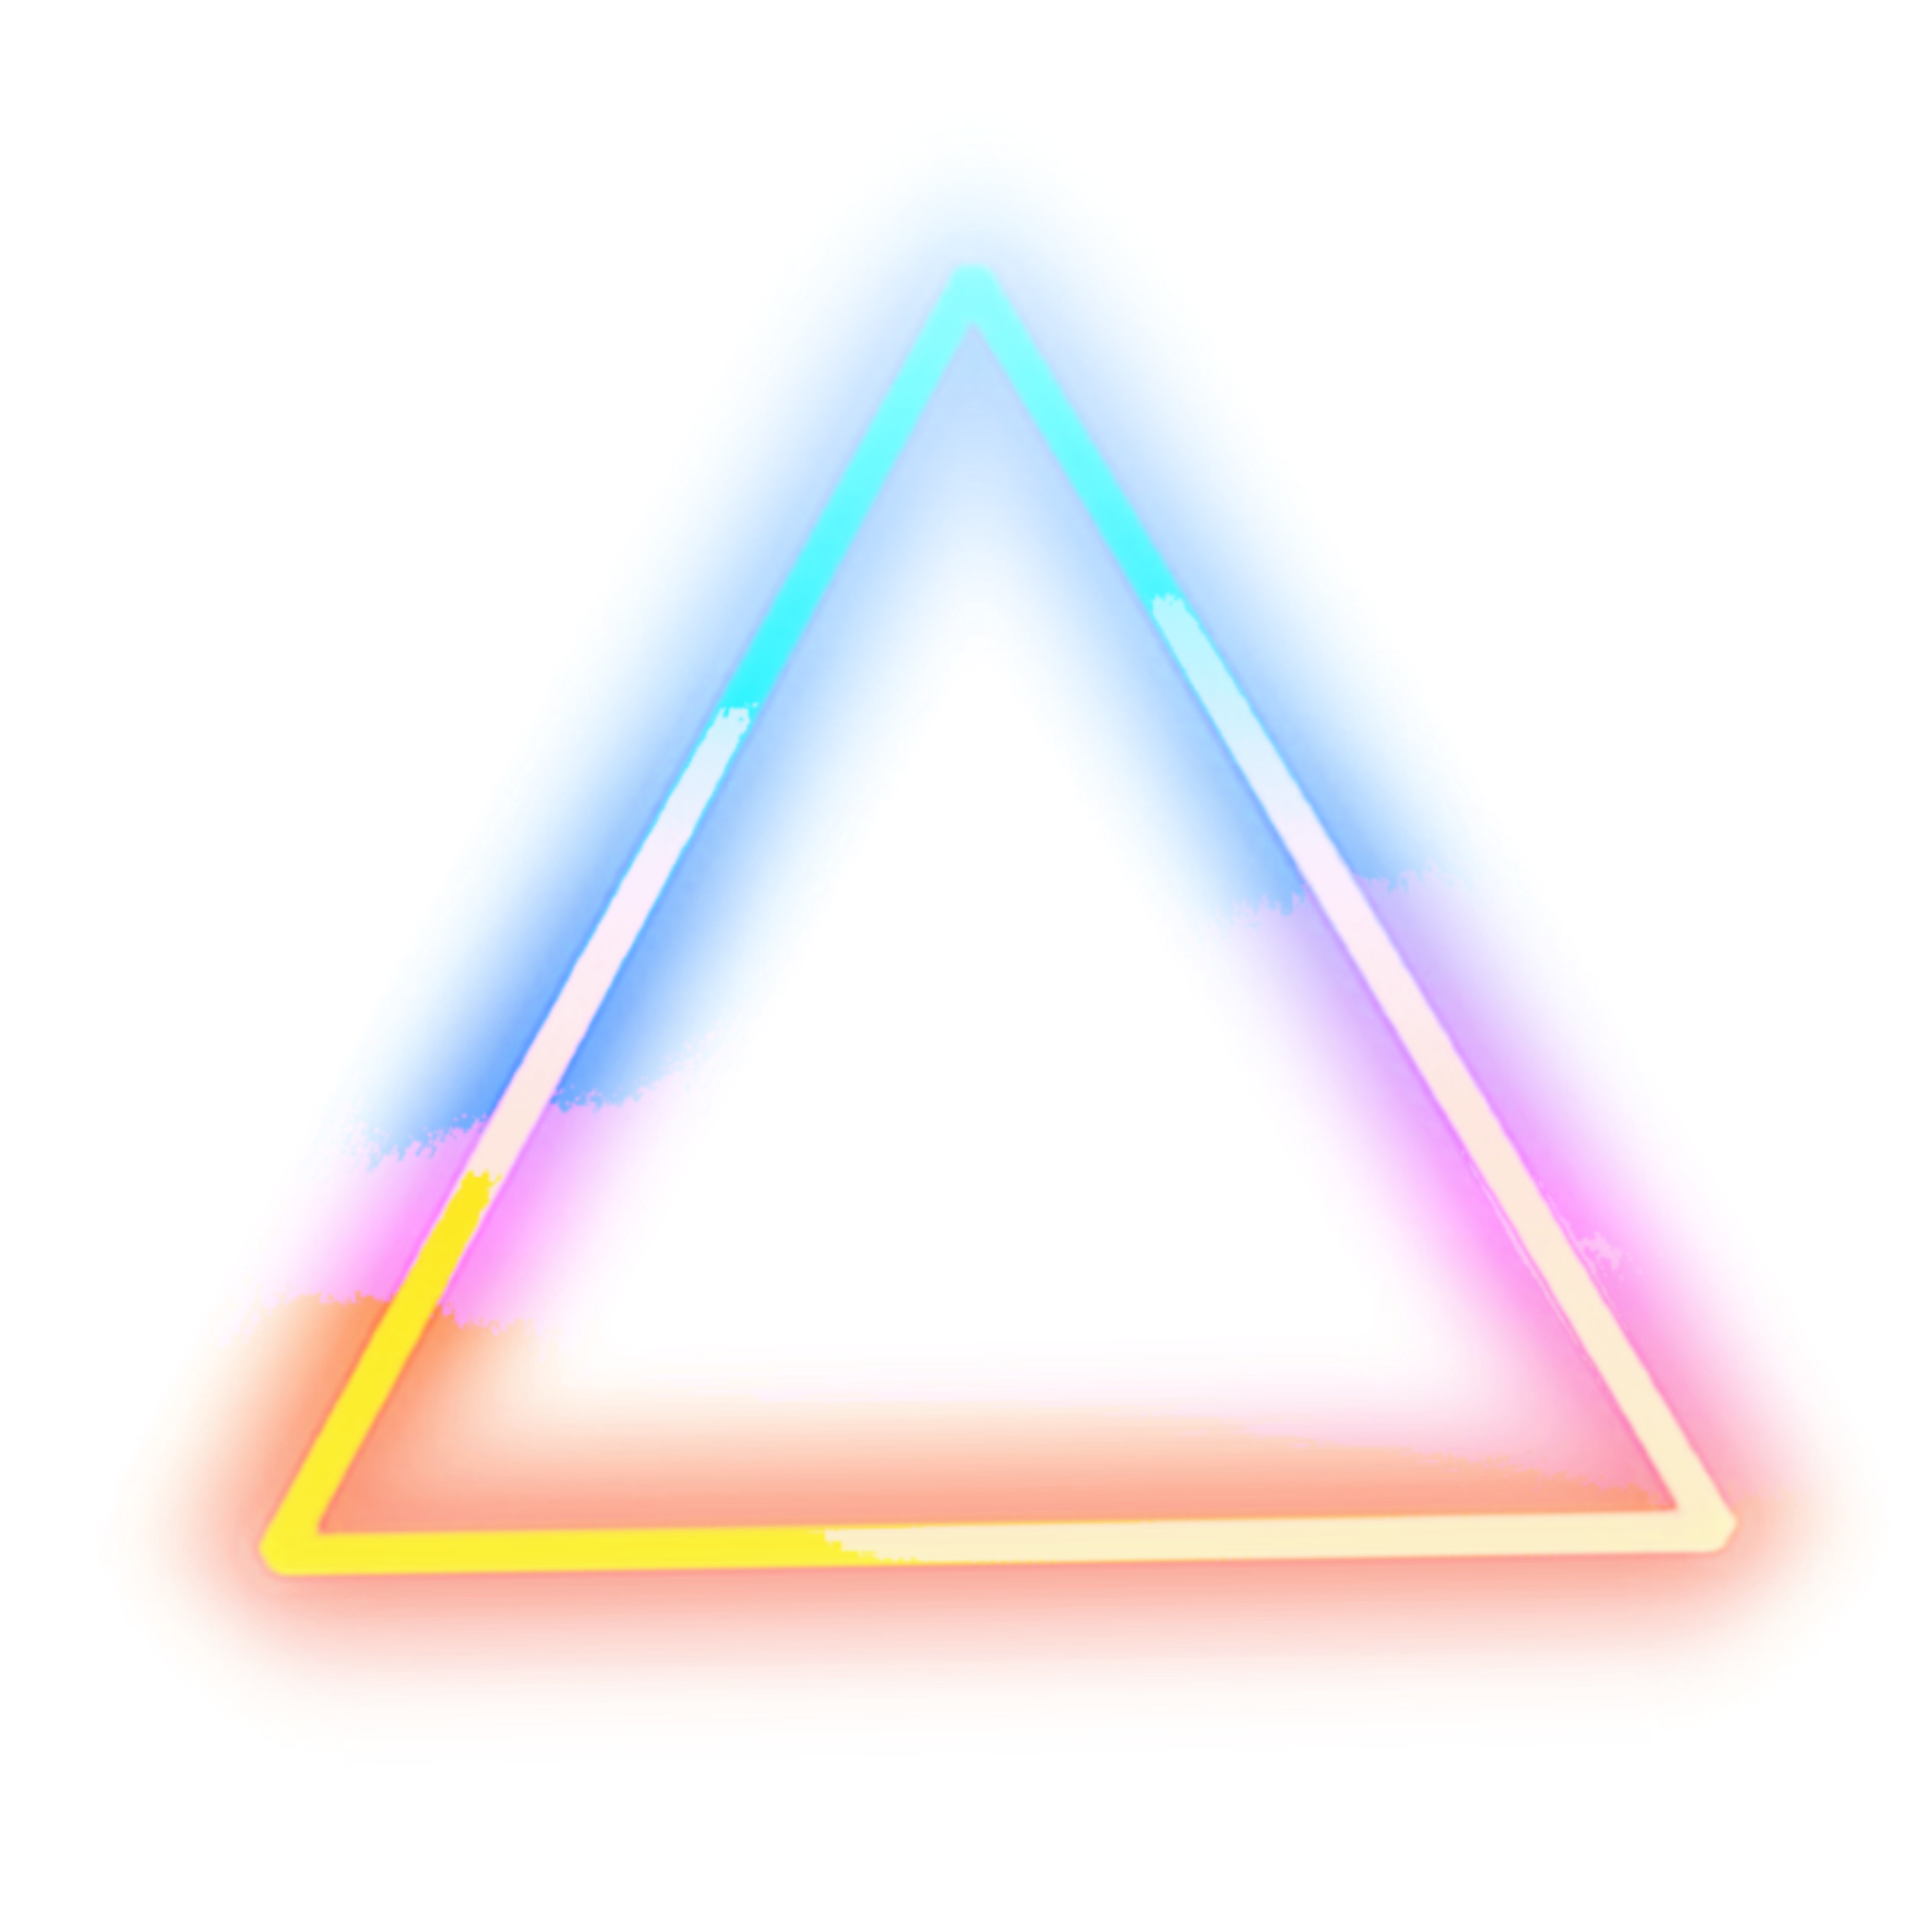 Triángulo geométrico PNG descargar imagen